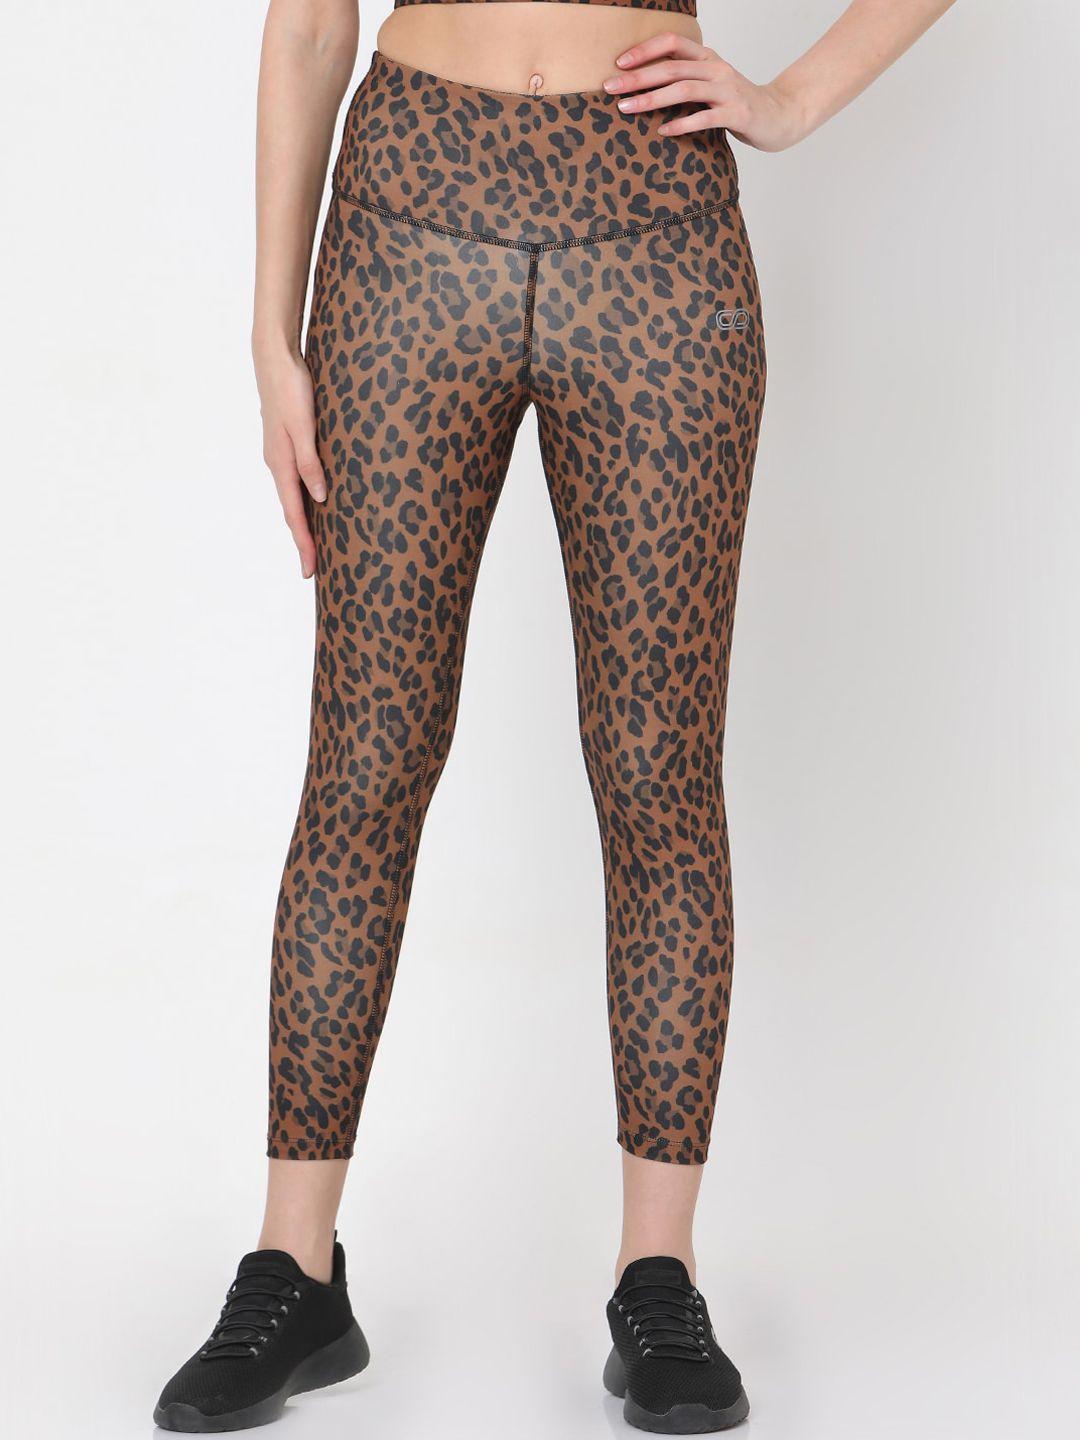 silvertraq women brown leopard printed anti odour sports tights